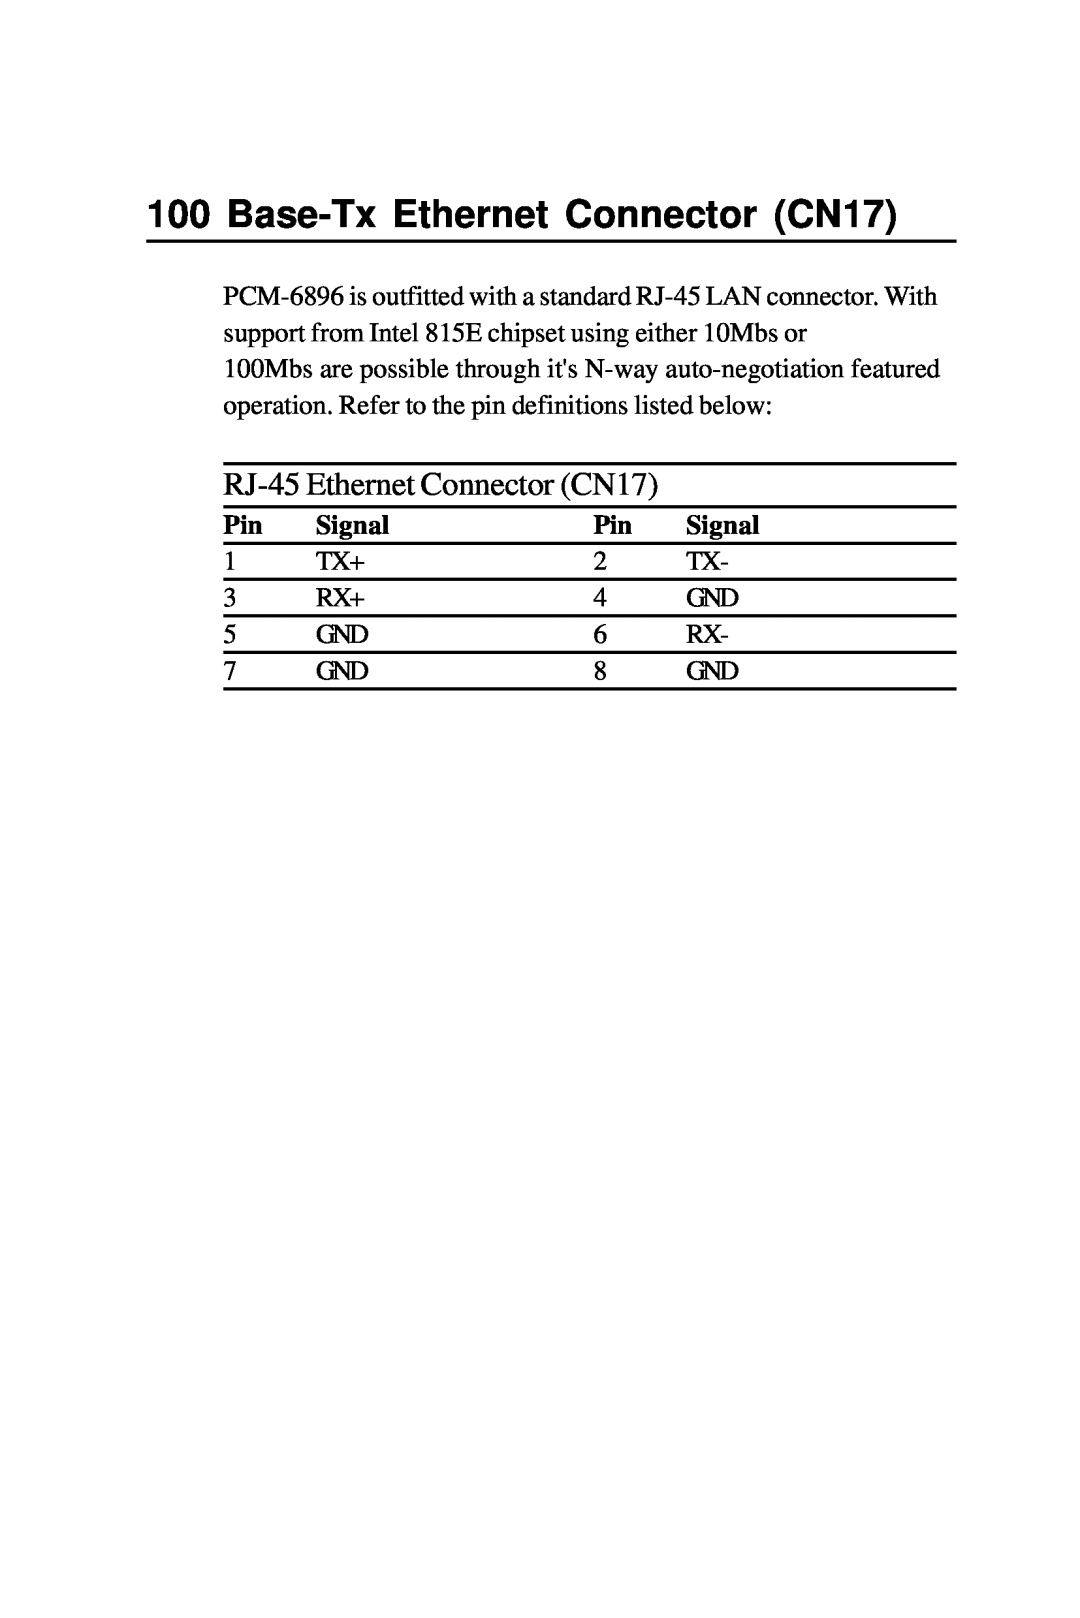 Intel PCM-6896 manual Base-Tx Ethernet Connector CN17, RJ-45 Ethernet Connector CN17 